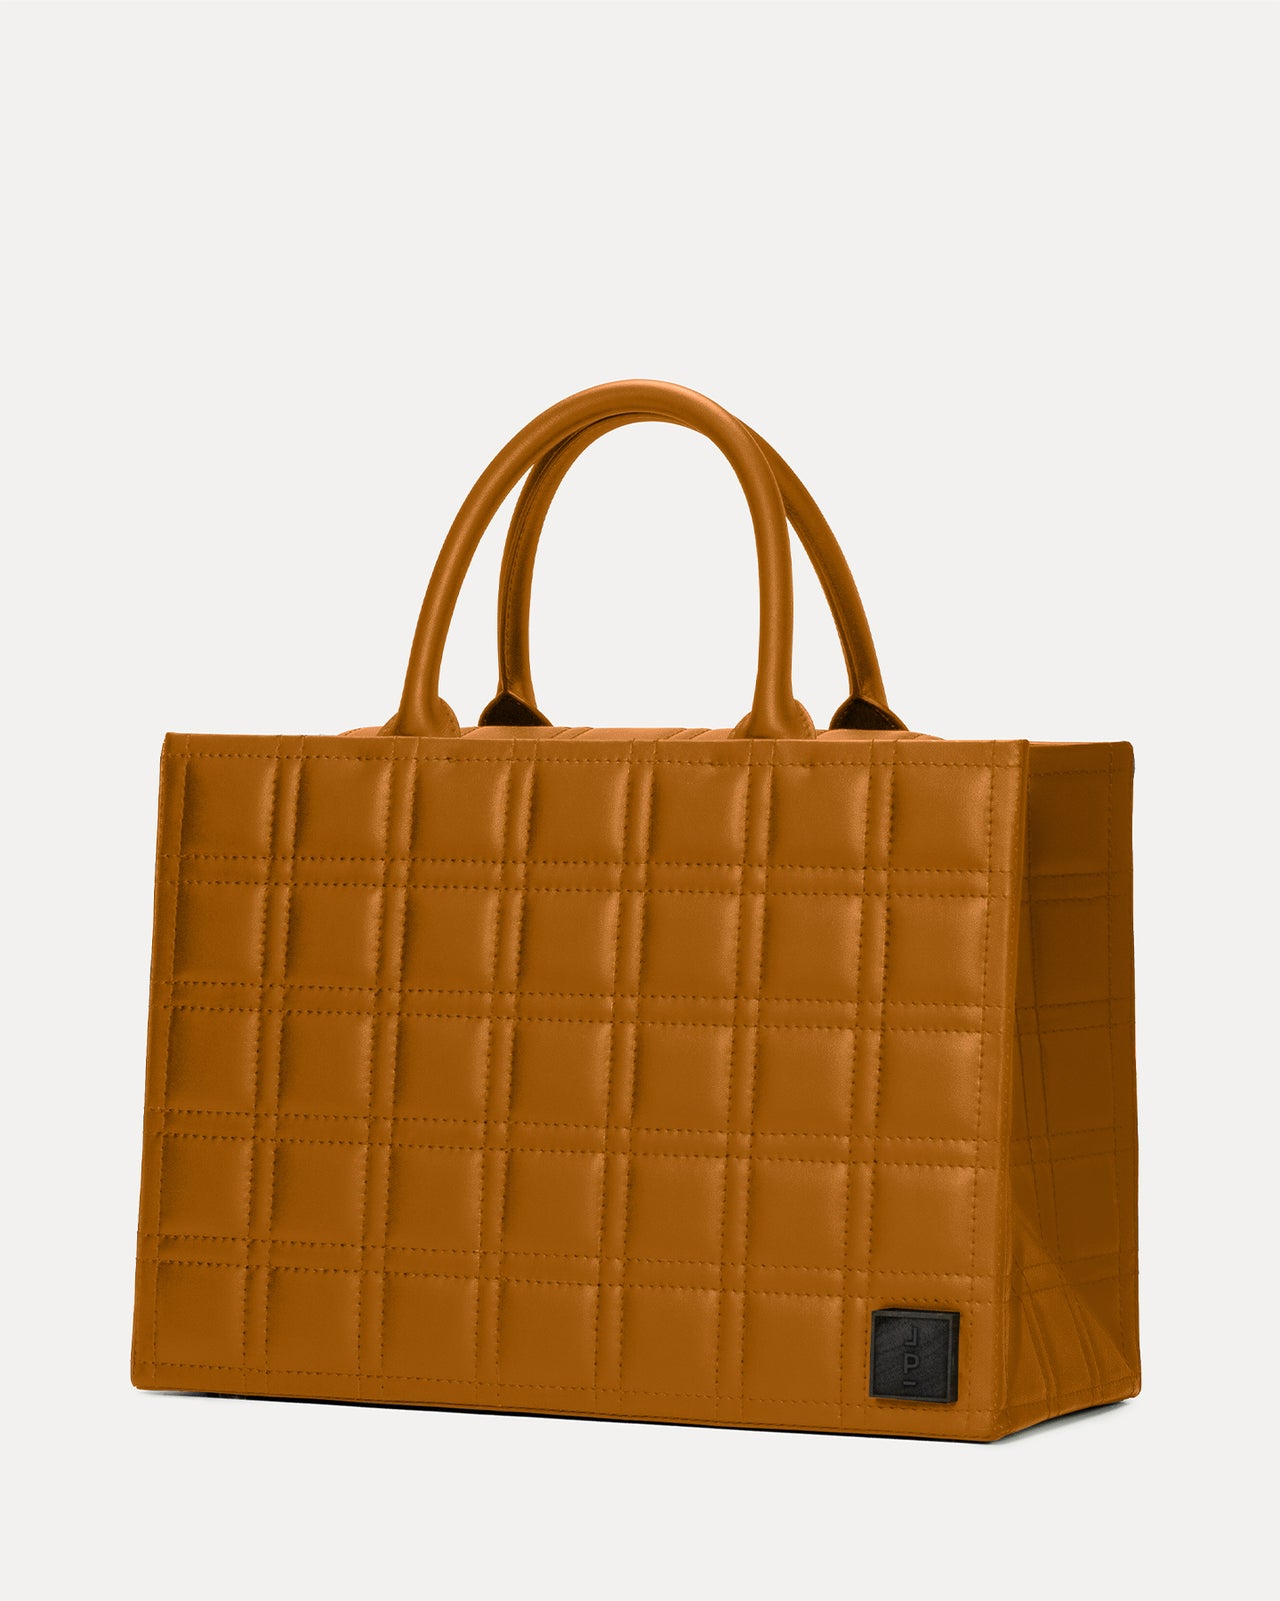 5x7 Bag in Brown